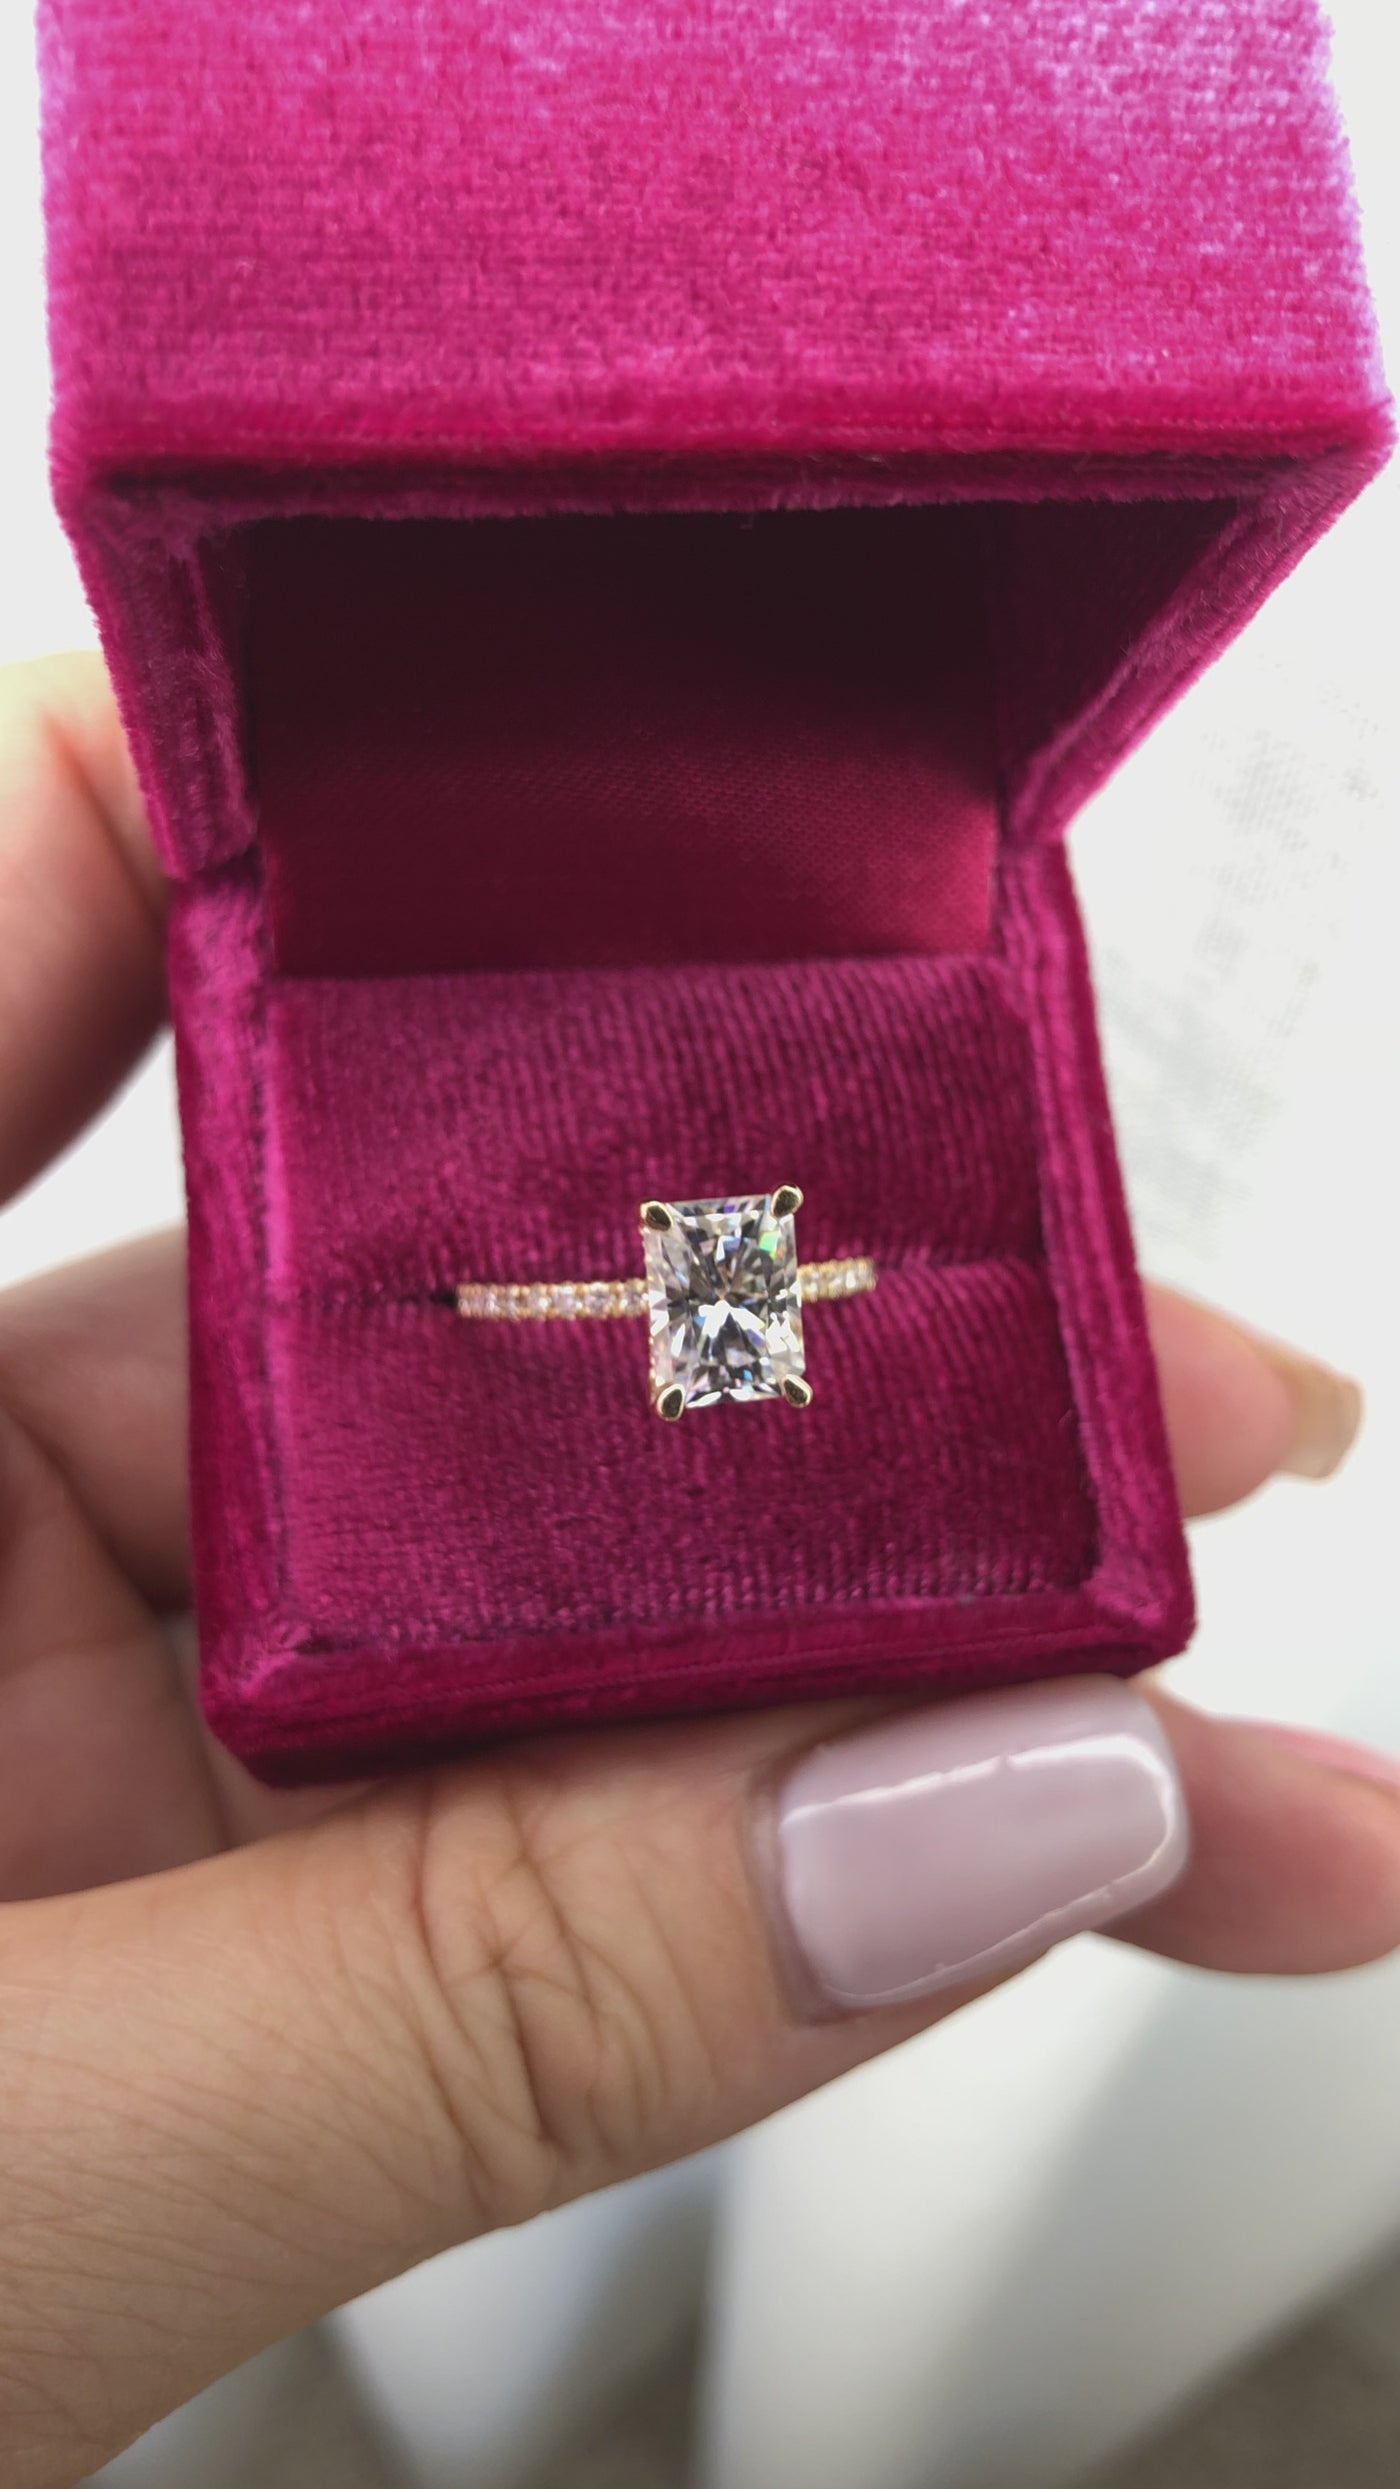 Mayeli Radiant Center Stone 4 Claw Prong Micro Pave Diamond Sides Engagement Ring